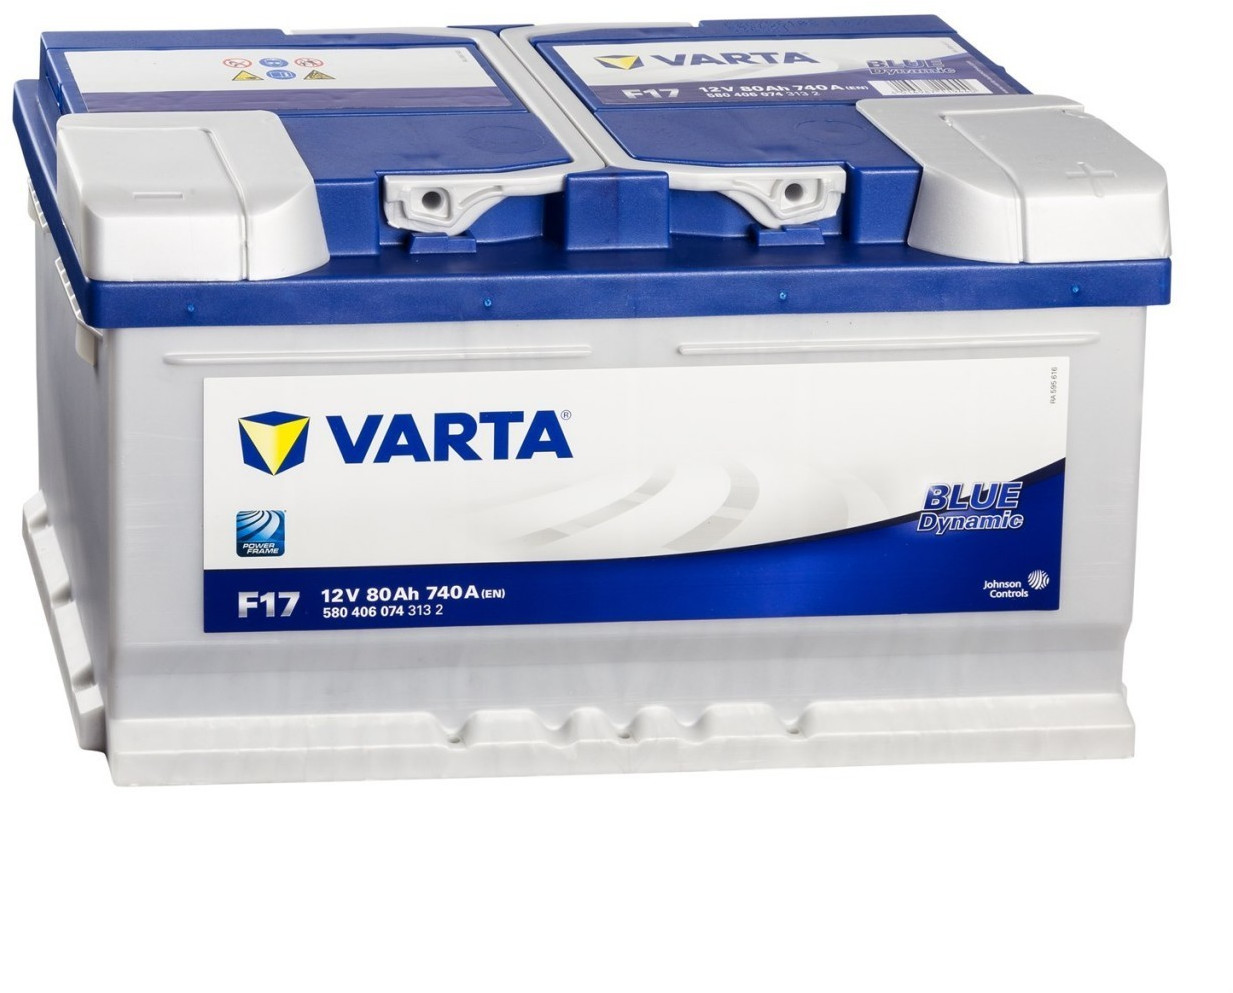 VARTA F16 Blue Dynamic 12V 80Ah 740A Autobatterie 580 400 074 inkl. 7,50€  Pfand